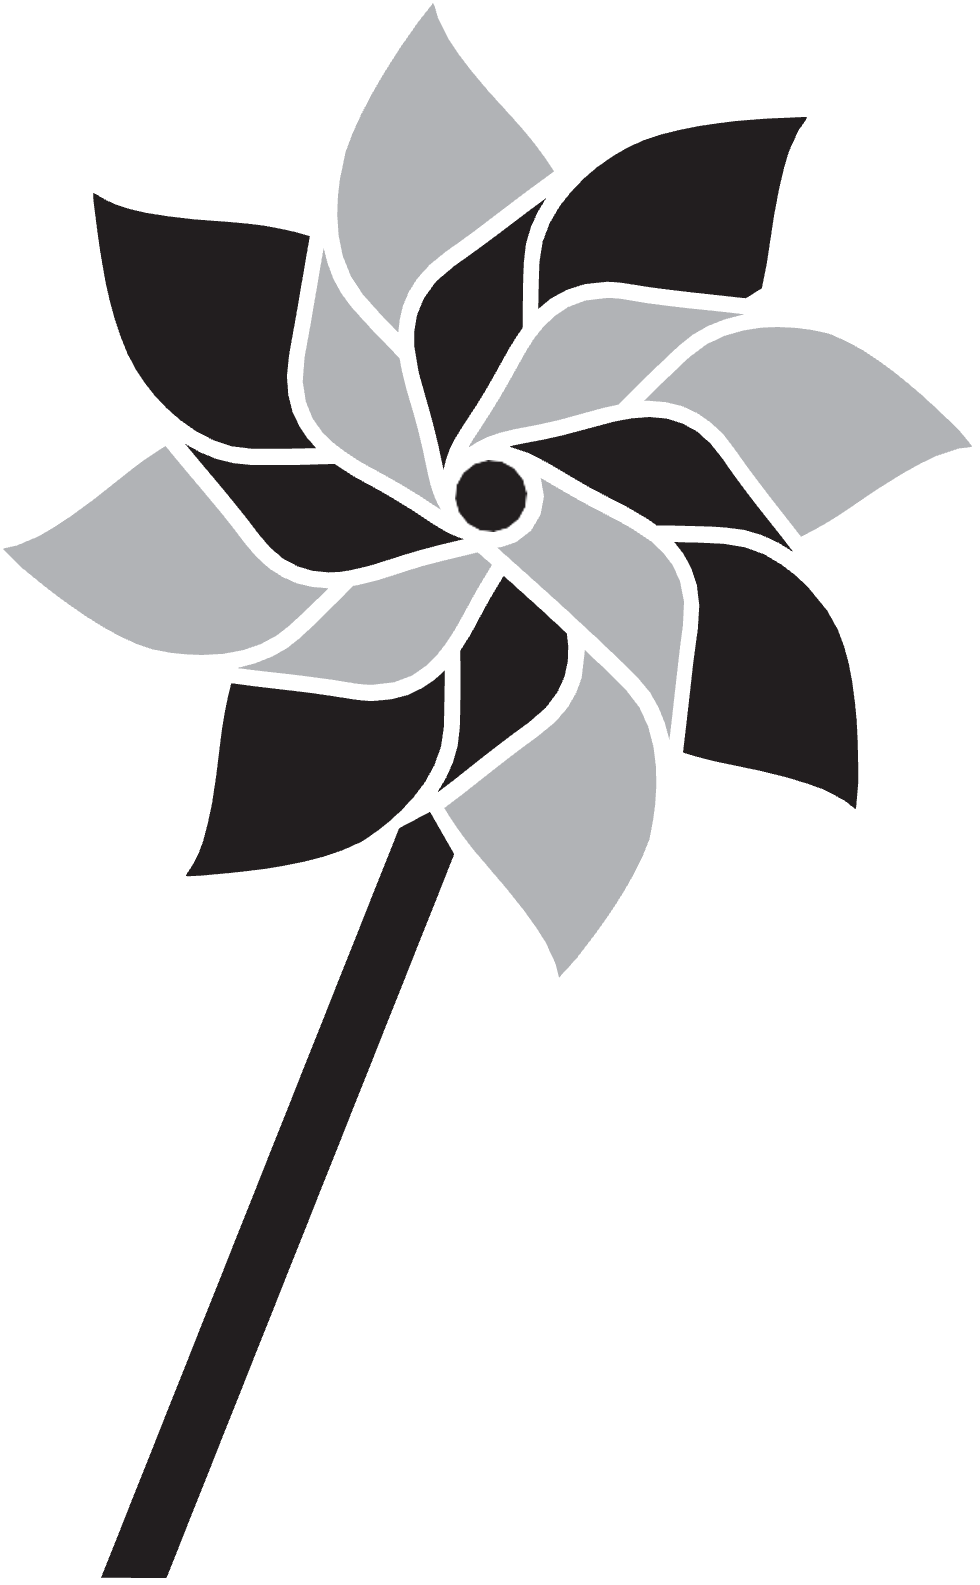 black and white pinwheel graphic